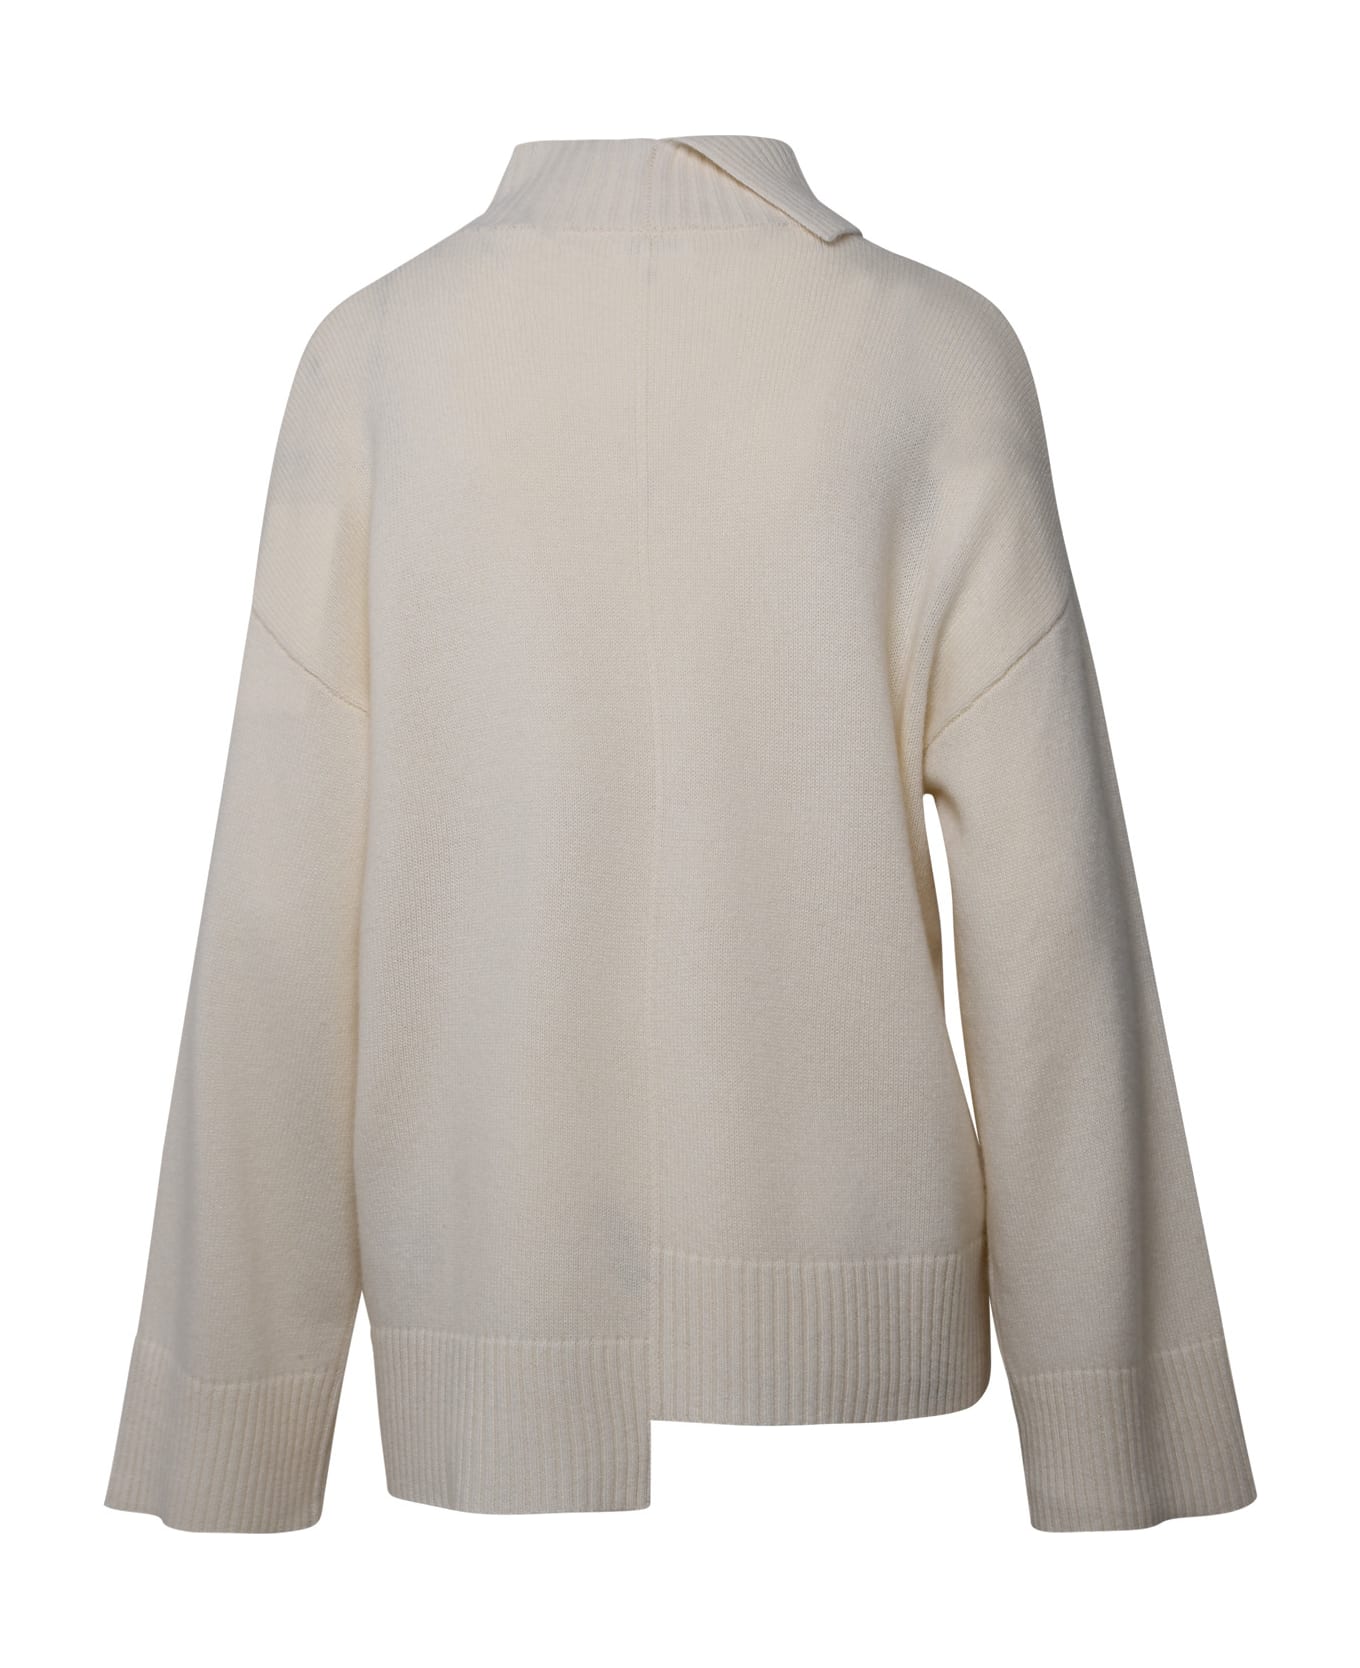 Parosh Cream Cashmere Blend Sweater - Panna